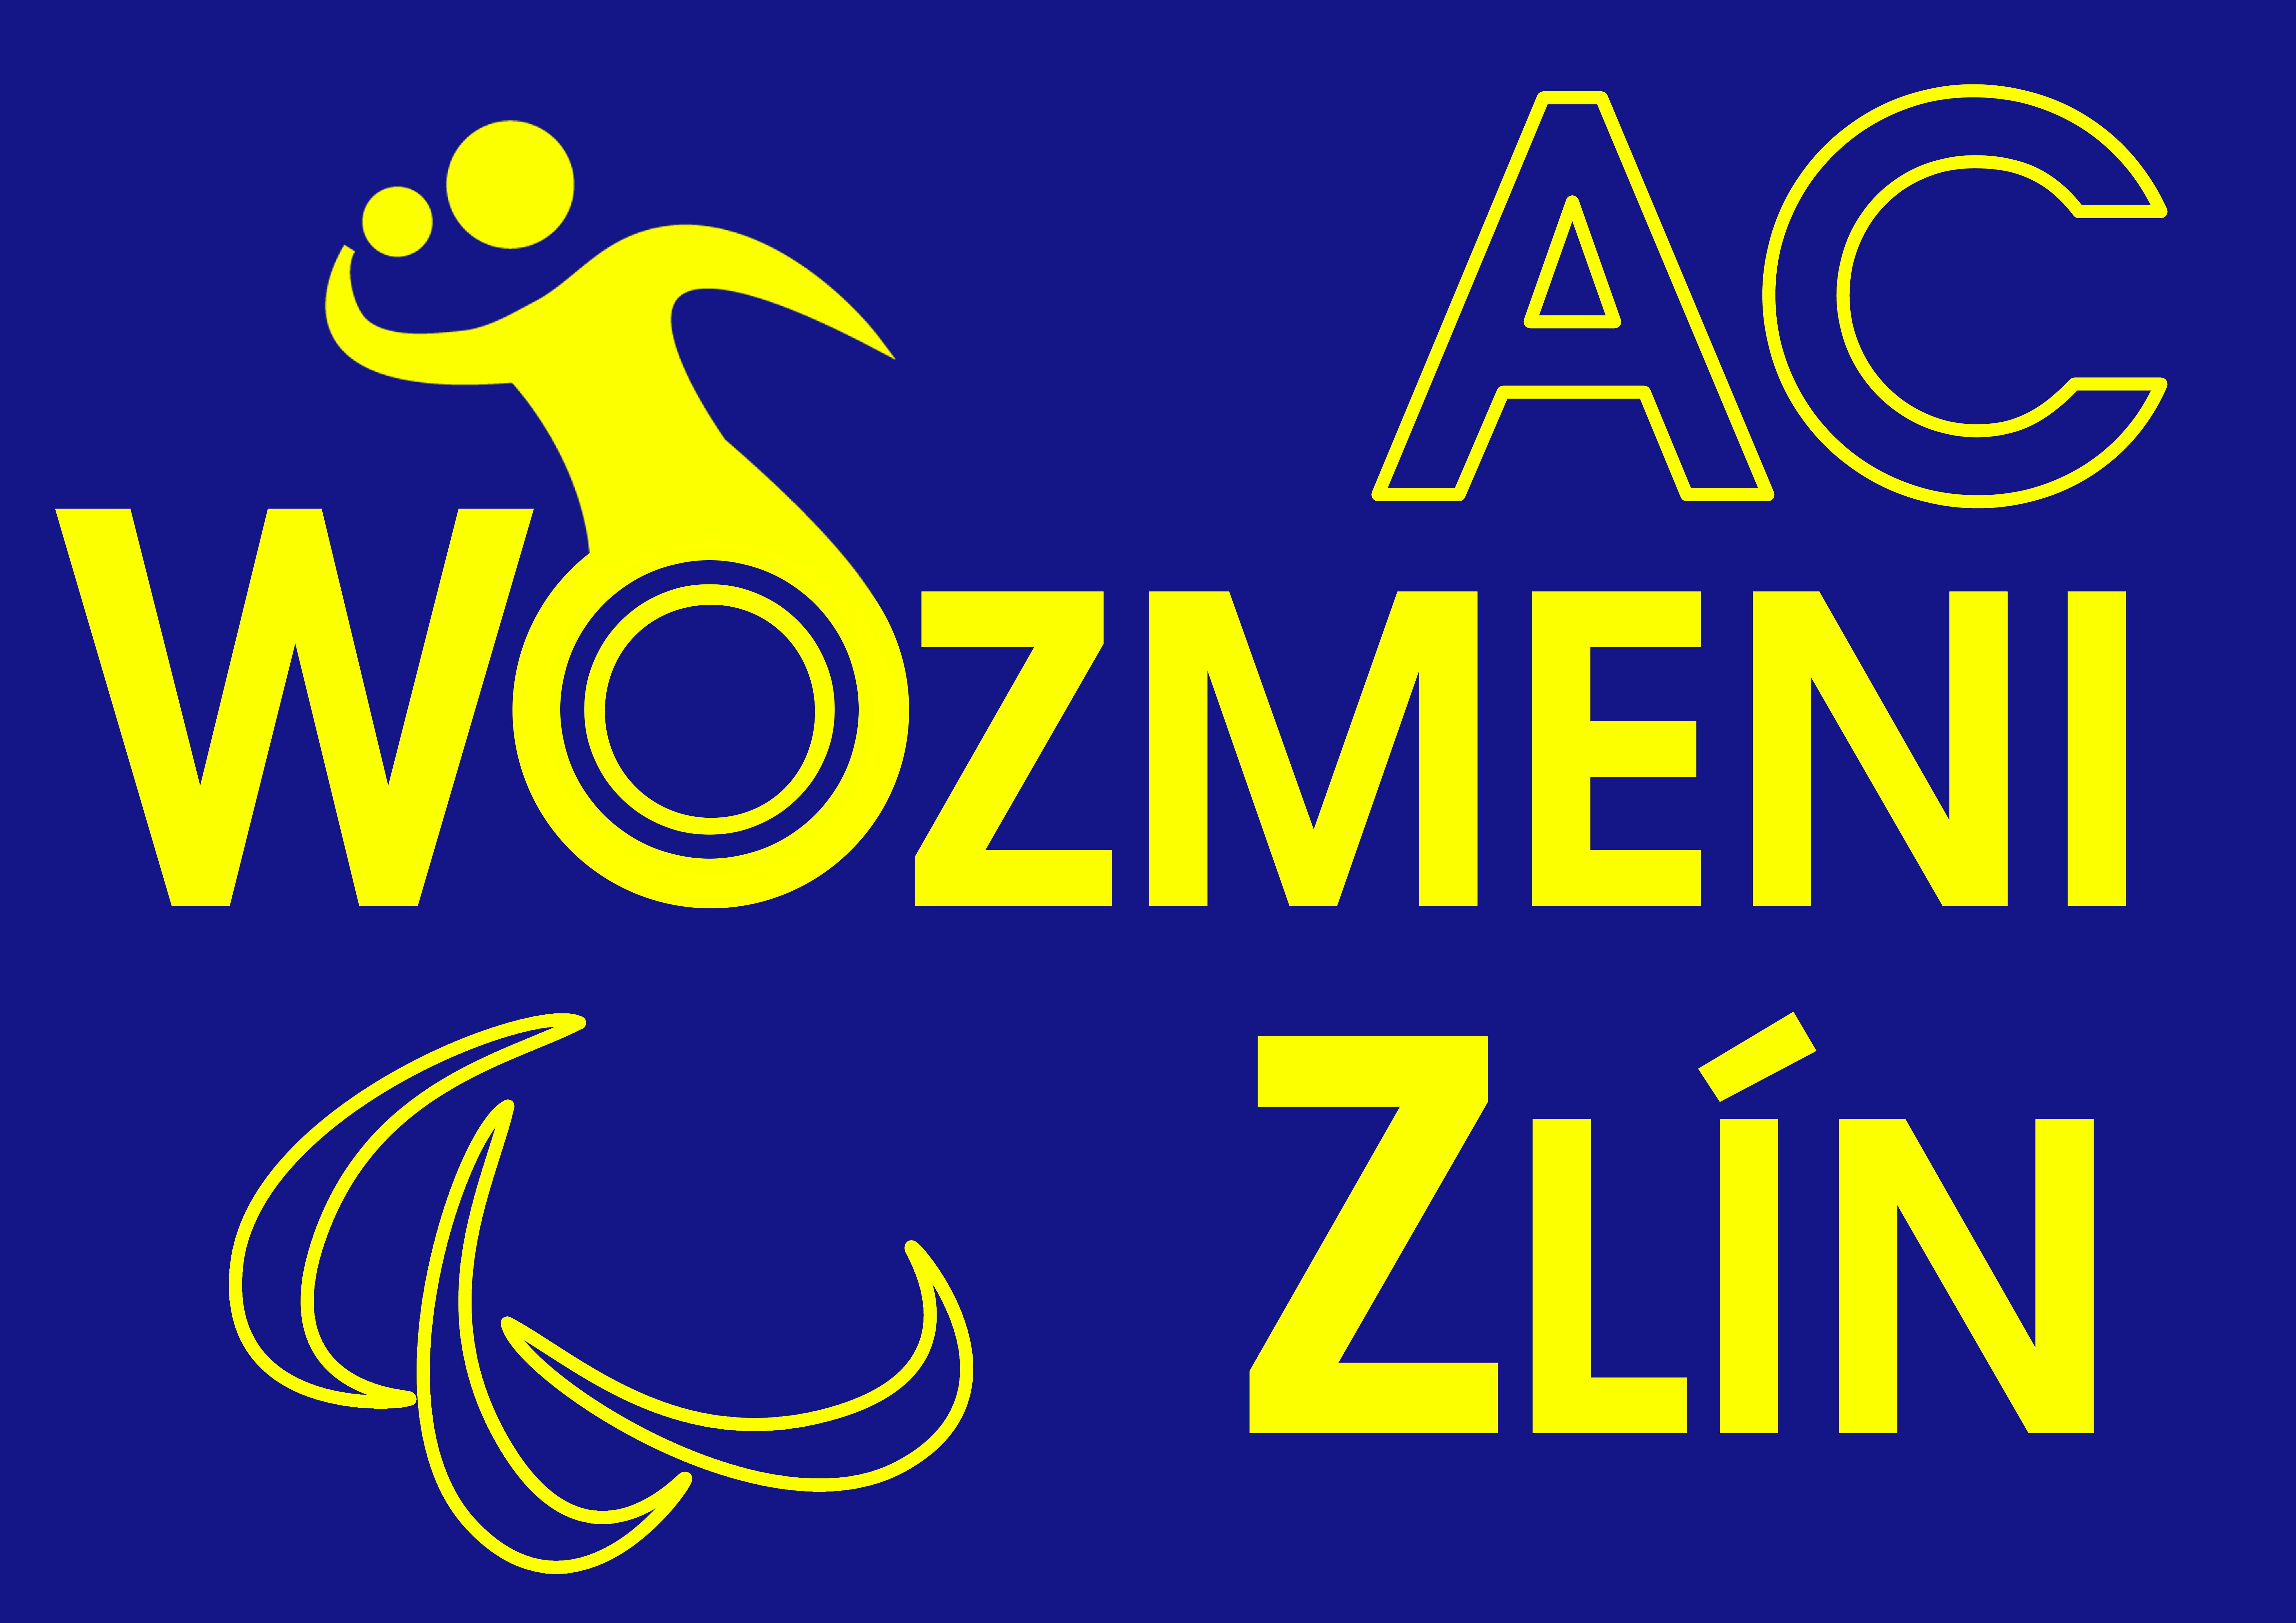 AC Wozmeni Zlín z.s.